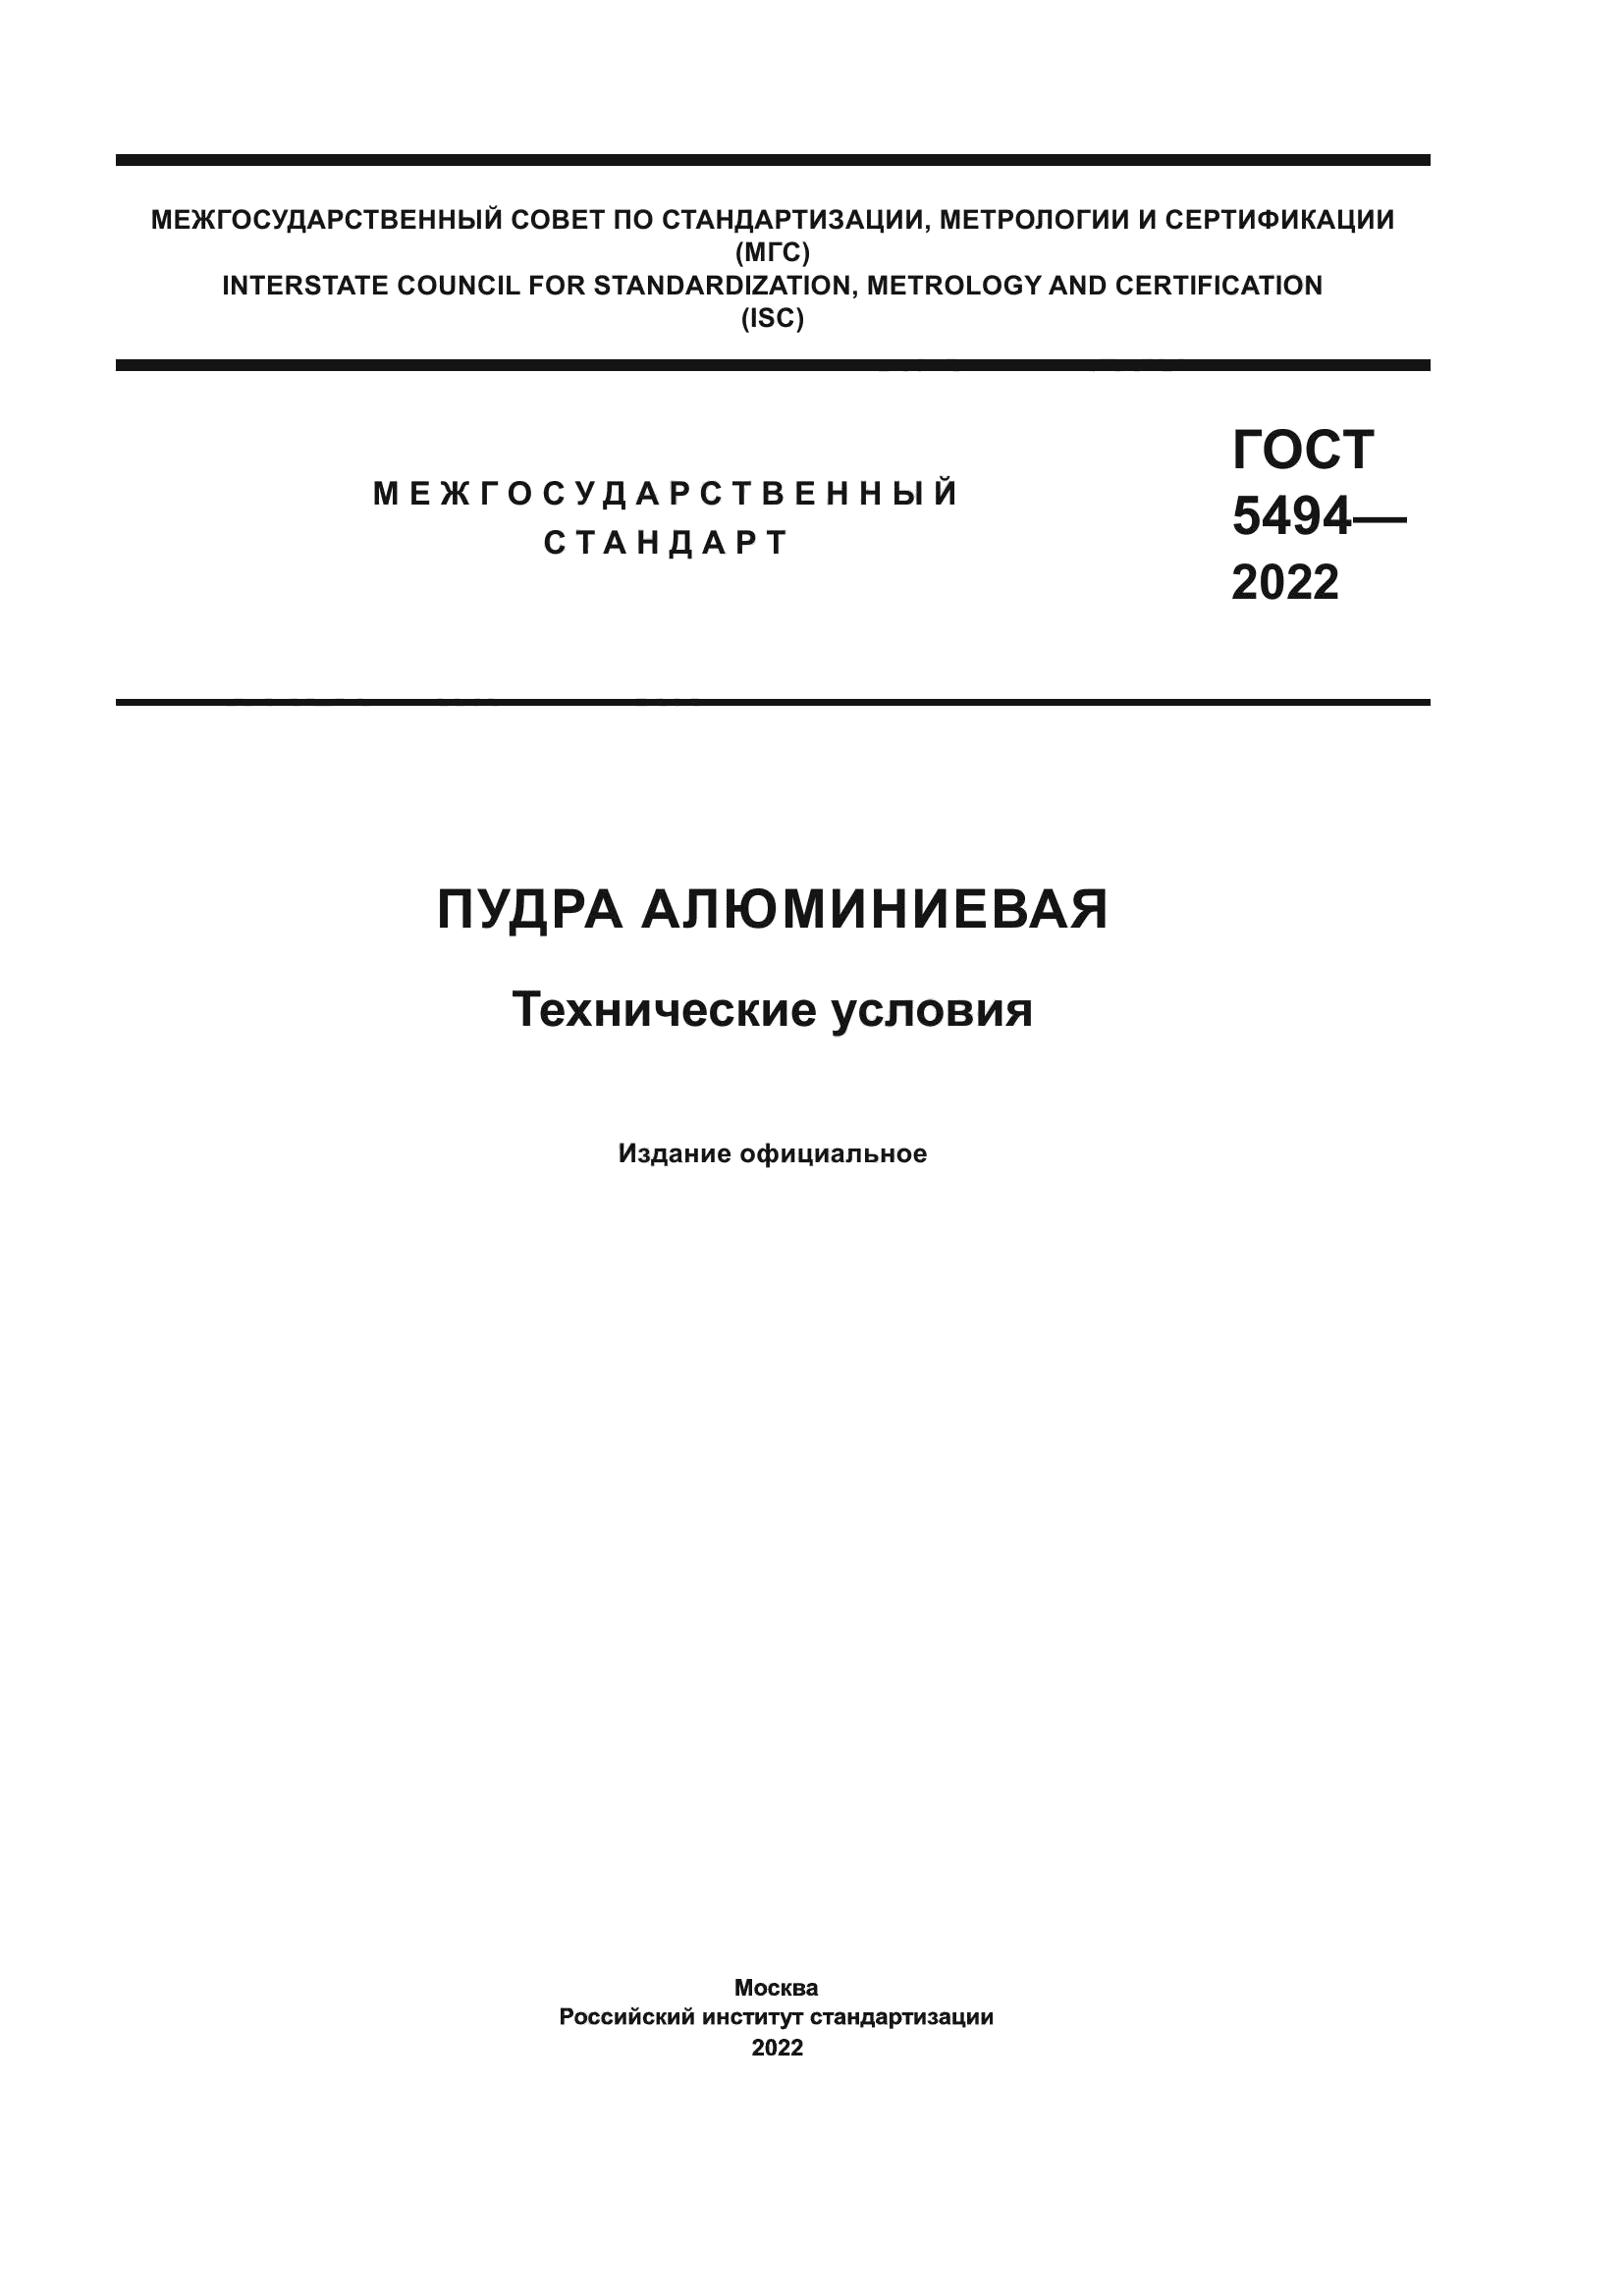 ГОСТ 5494-2022